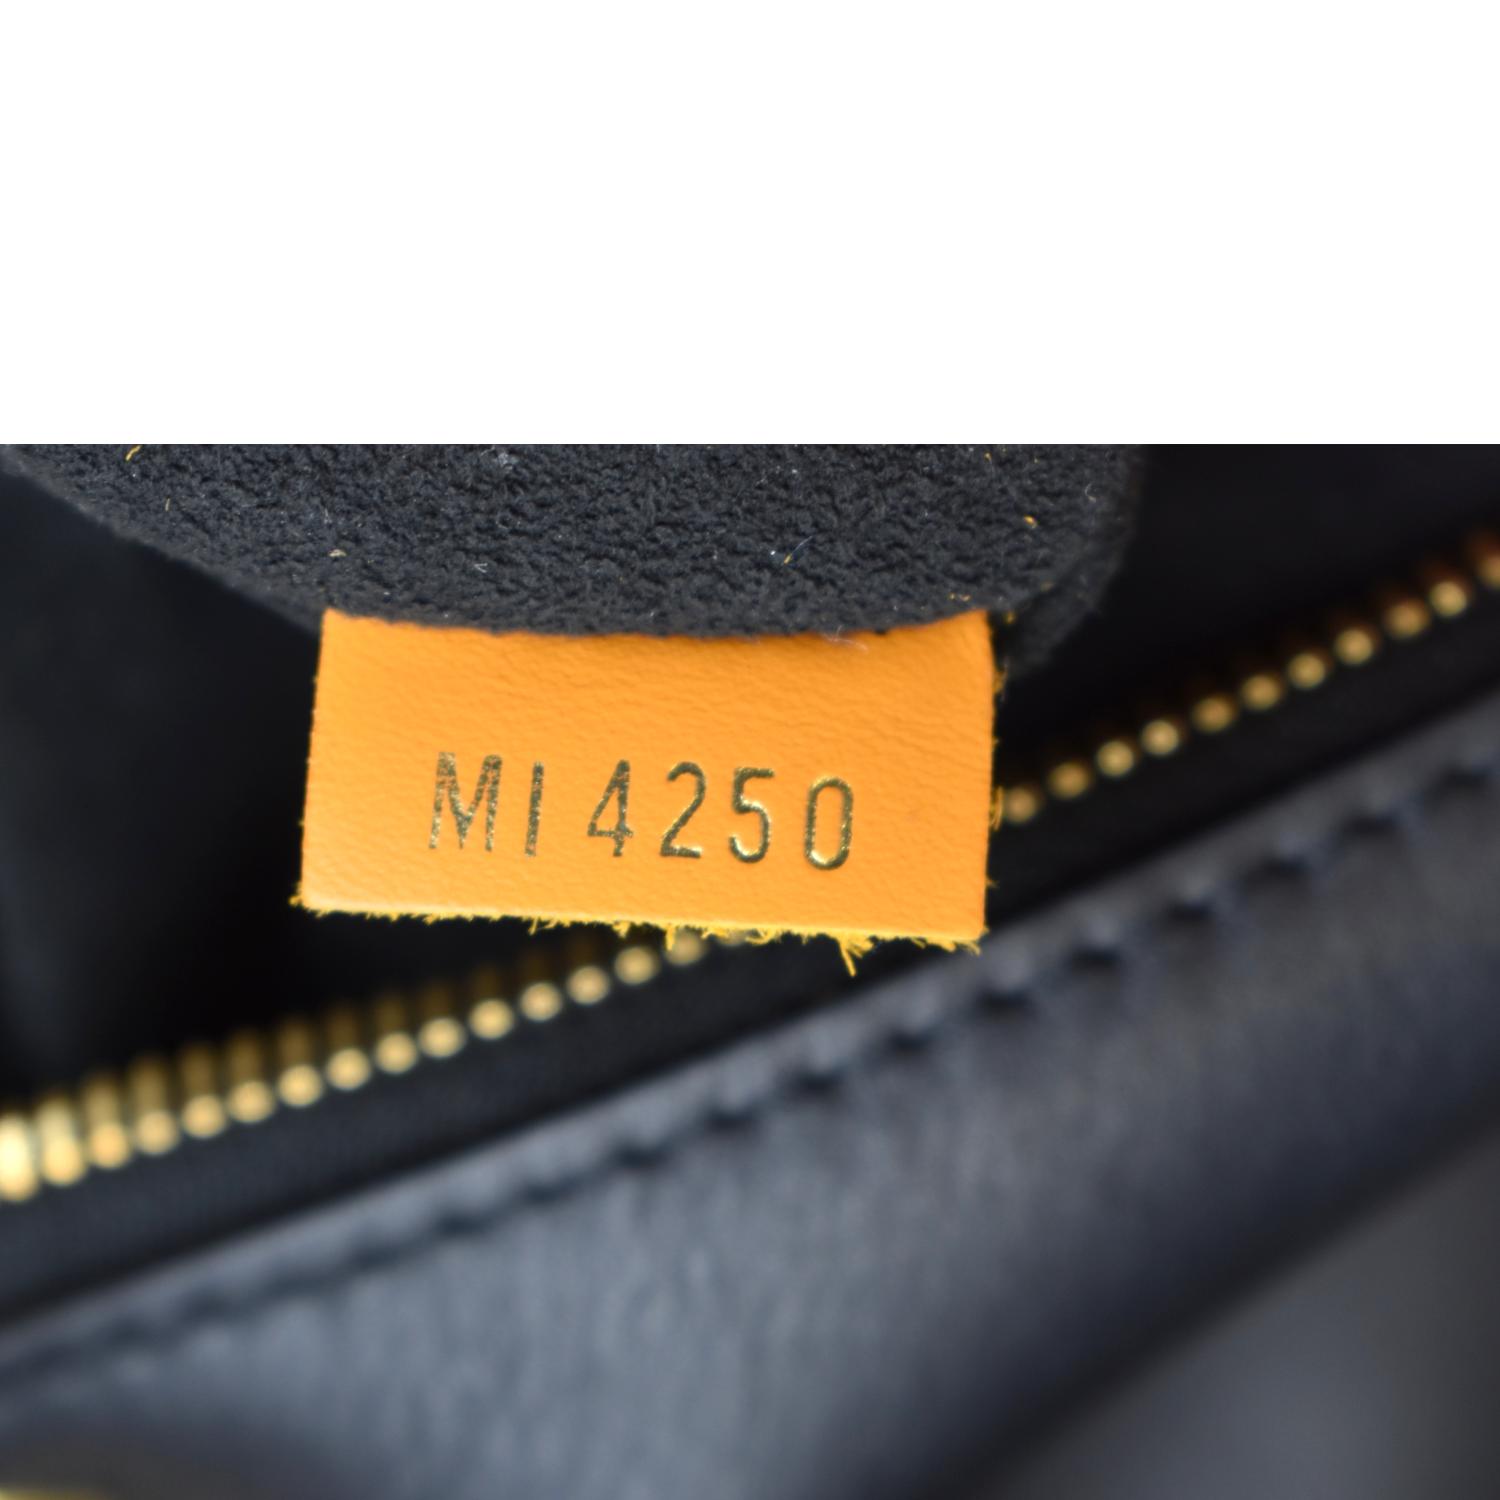 Louis Vuitton Maida Hobo Bag - Vitkac shop online